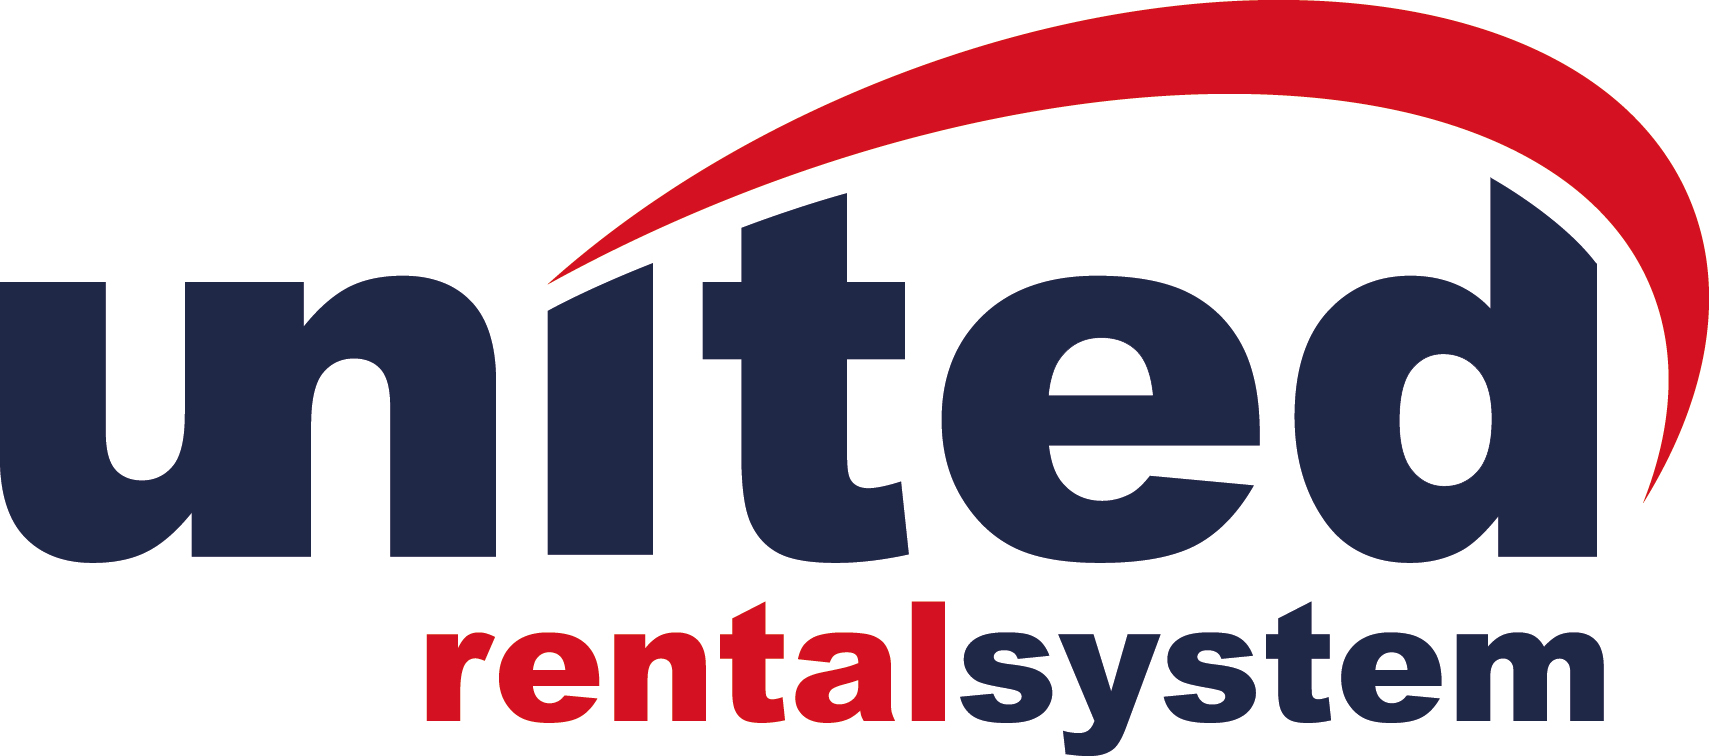 United Rental System